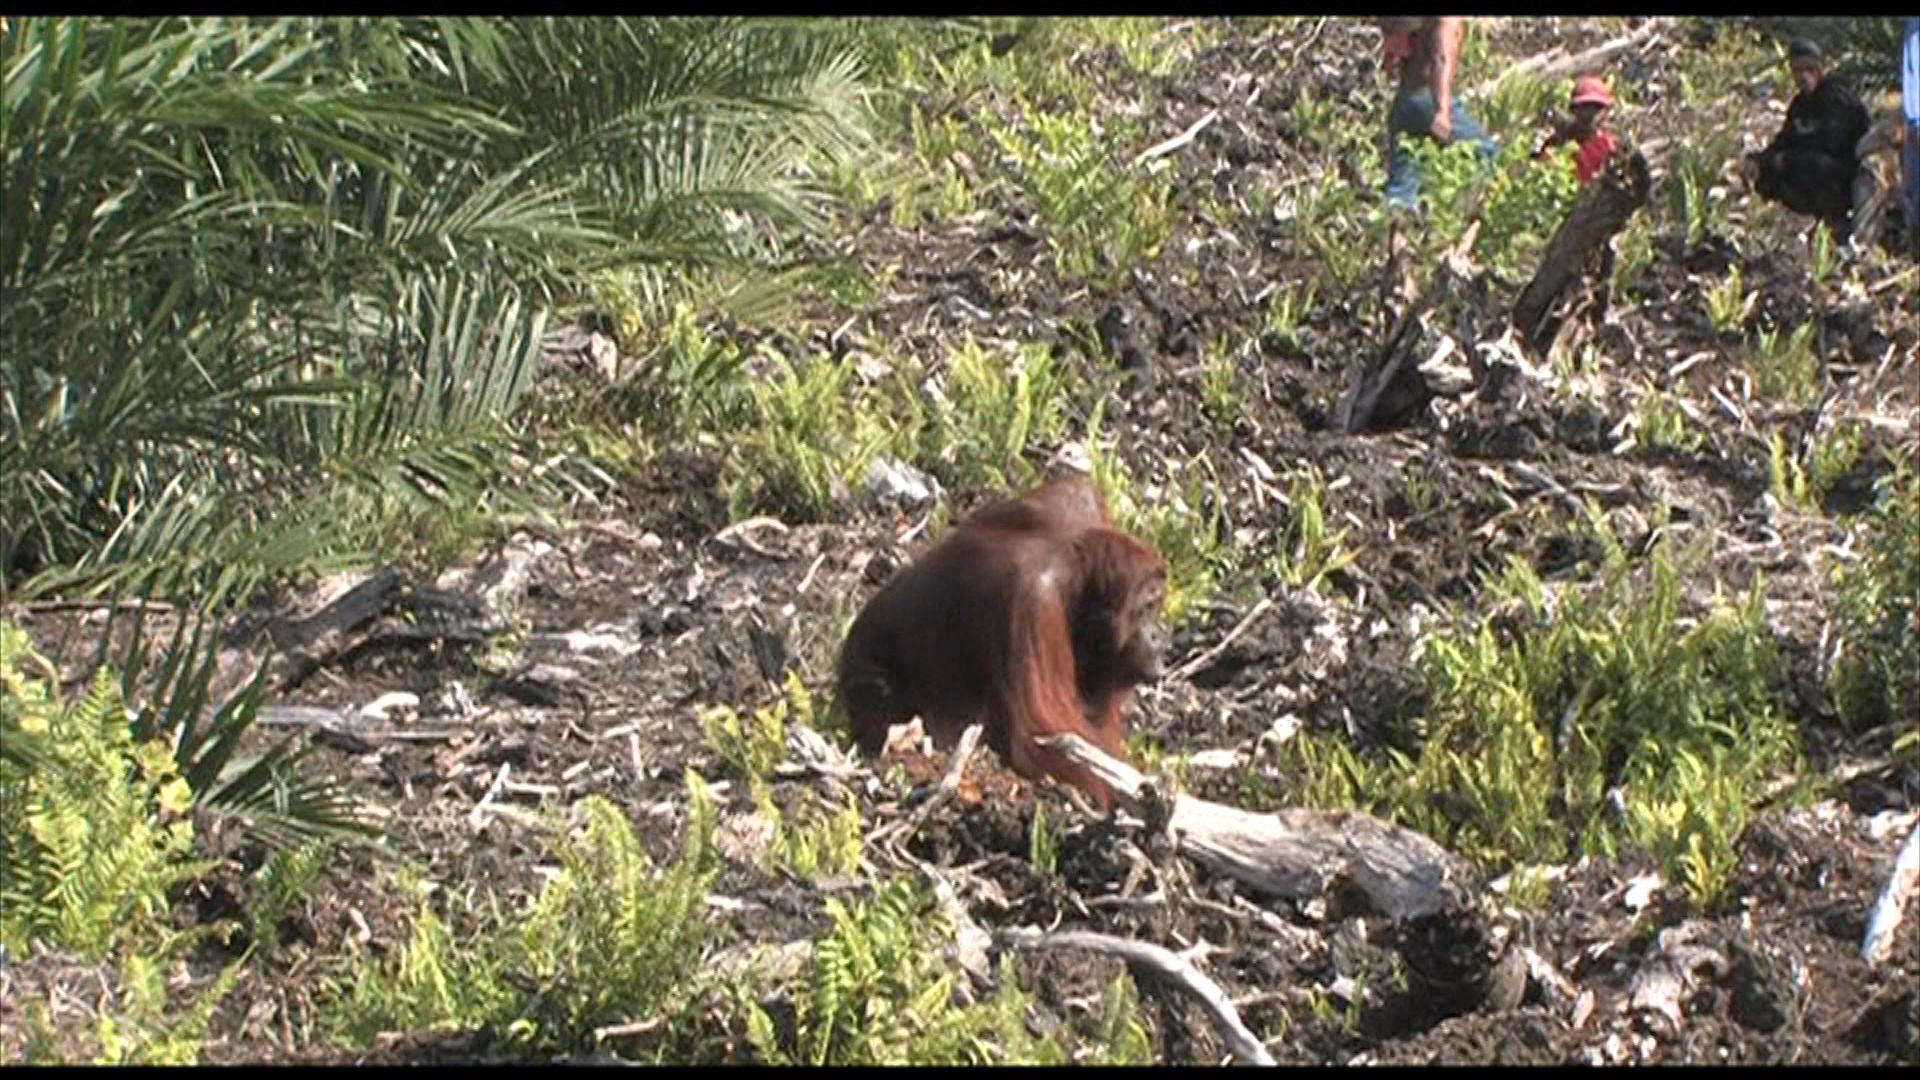 Orangutan in burned out field